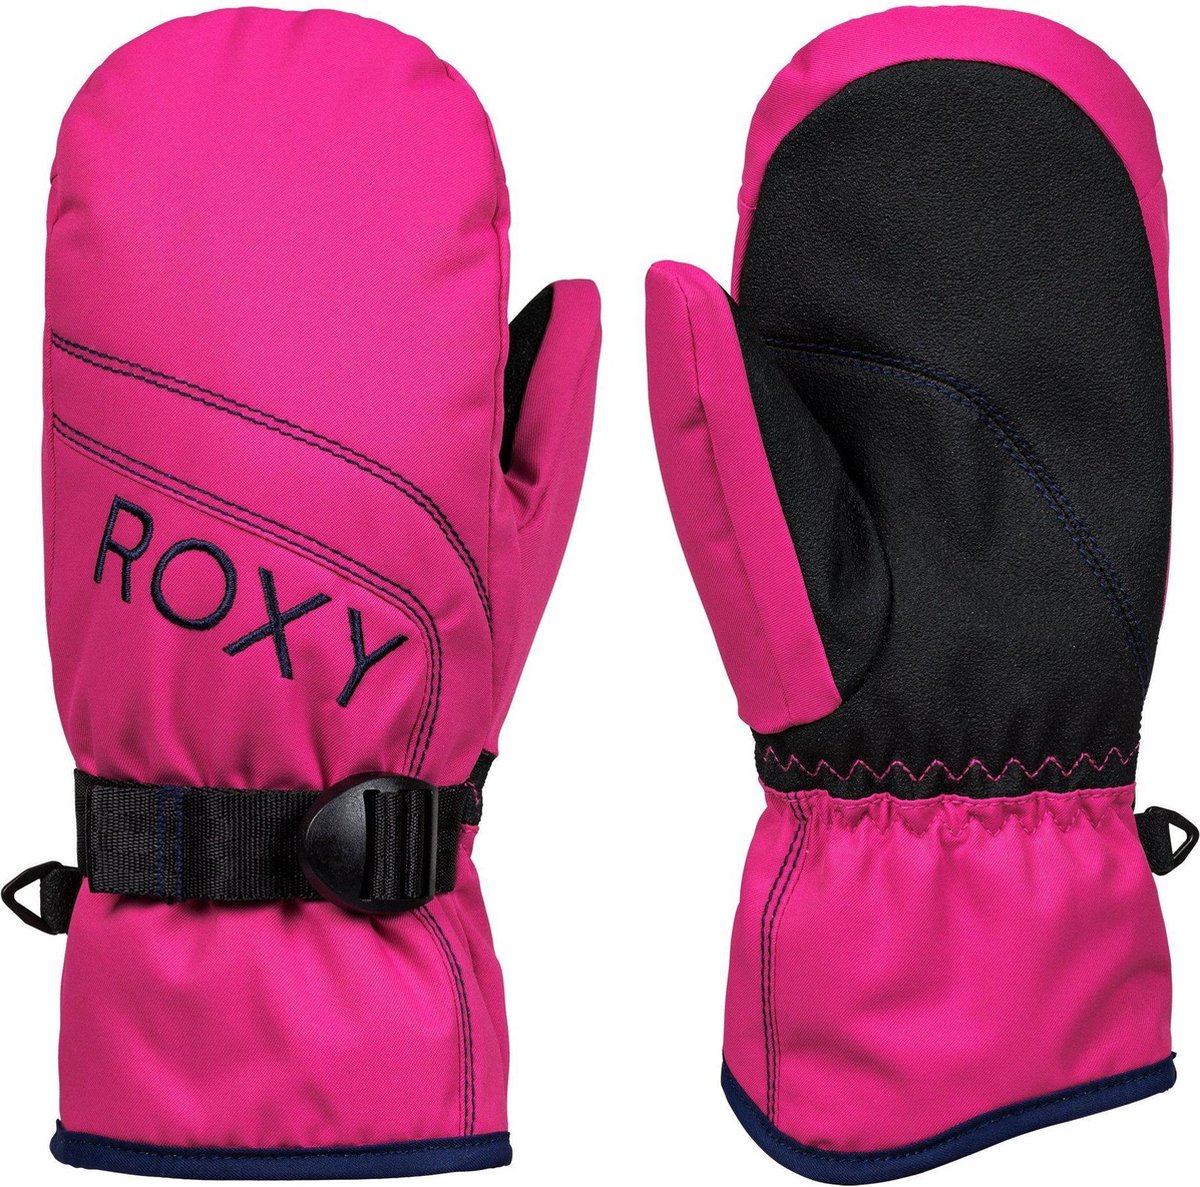 Roxy Jett So Meisjes Skihandschoenen - Beetroot Pink - Maat 8/S